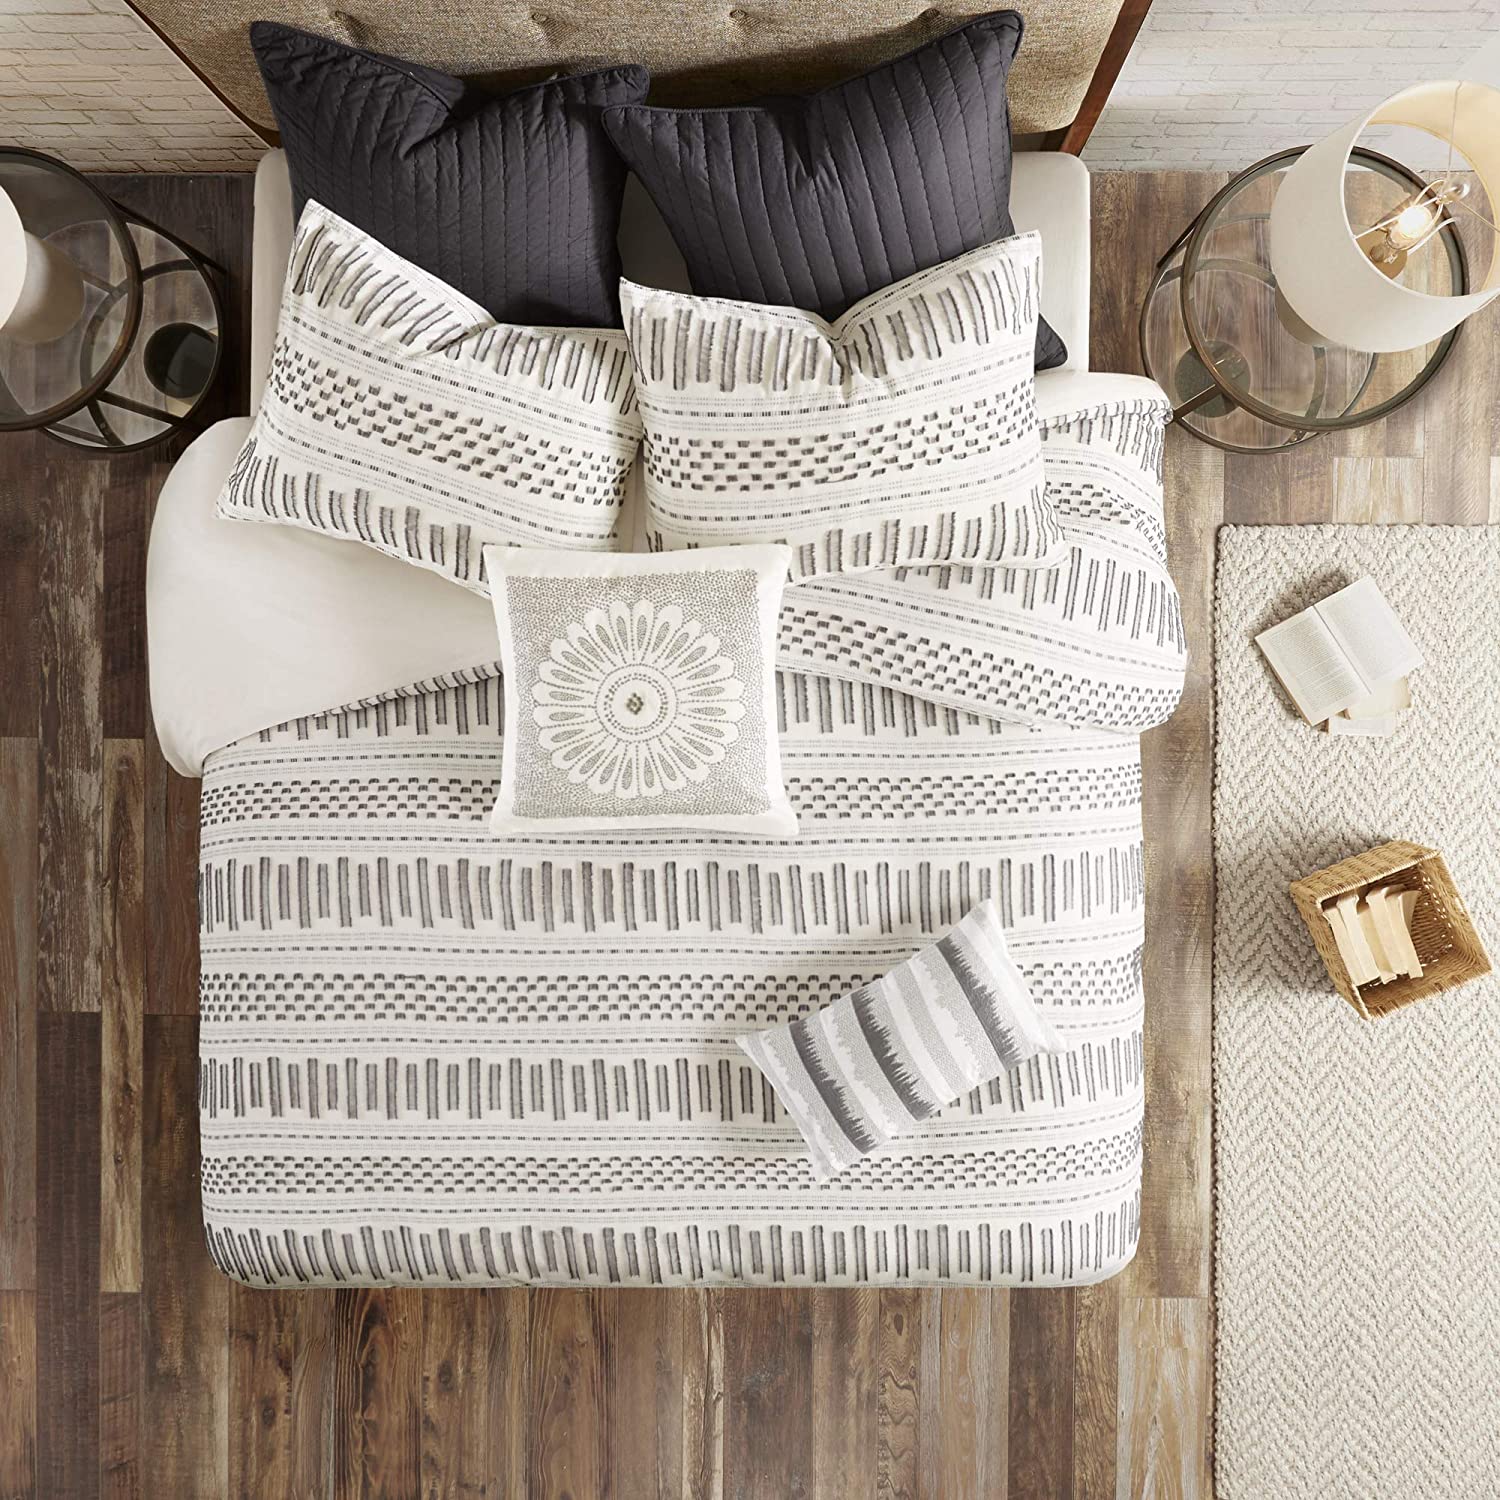 Price:$129.99  100% Cotton Duvet Mid Century Modern Design, All Season Comforter Cover Bedding Set, Matching Shams, King/Cal King(104"x92"), Rhea, Ivory Geometric Clipped Jacquard 3 Piece : Home & Kitchen